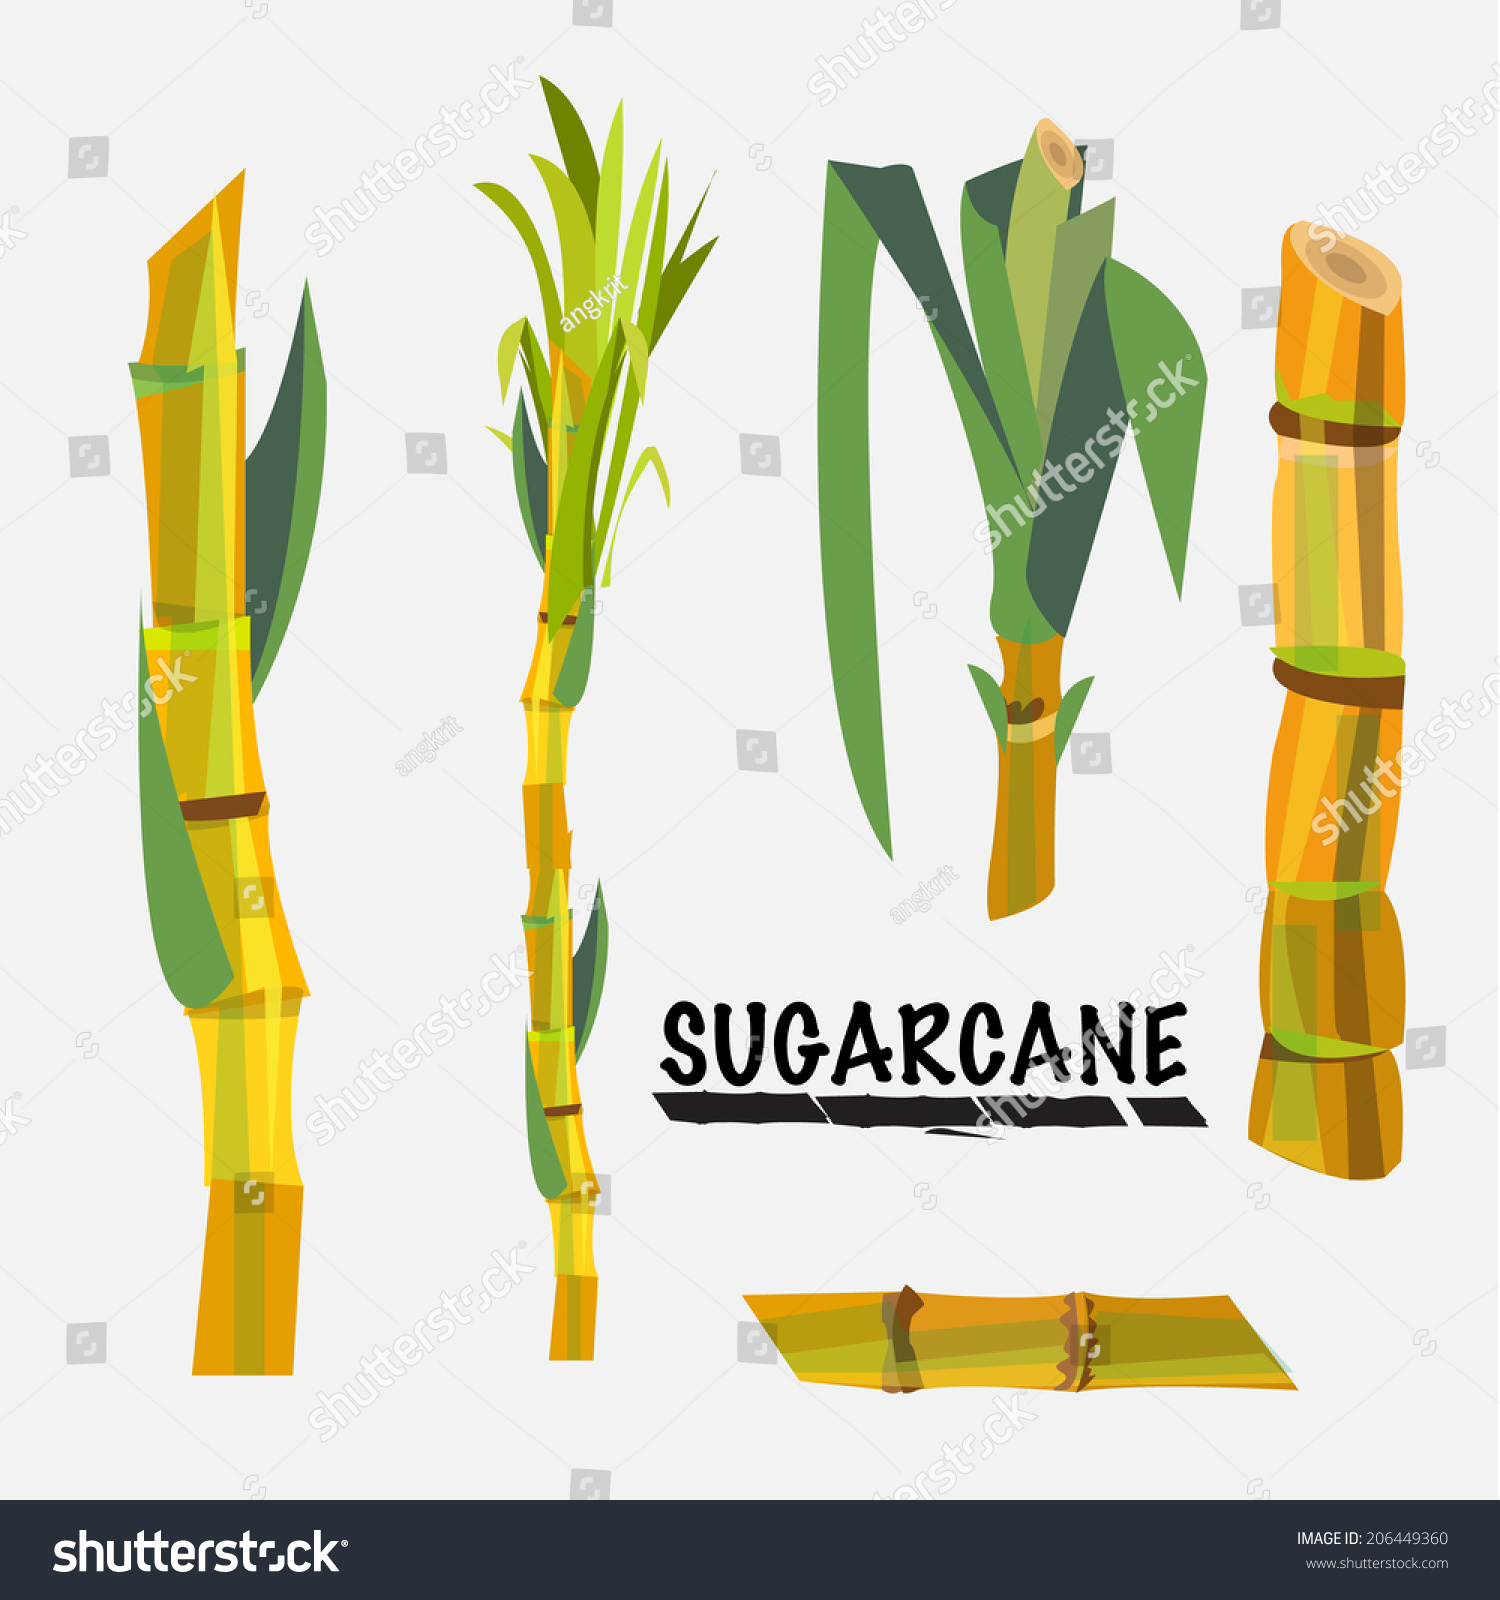 Sugarcane Vector Illustration 206449360 Shutterstock 